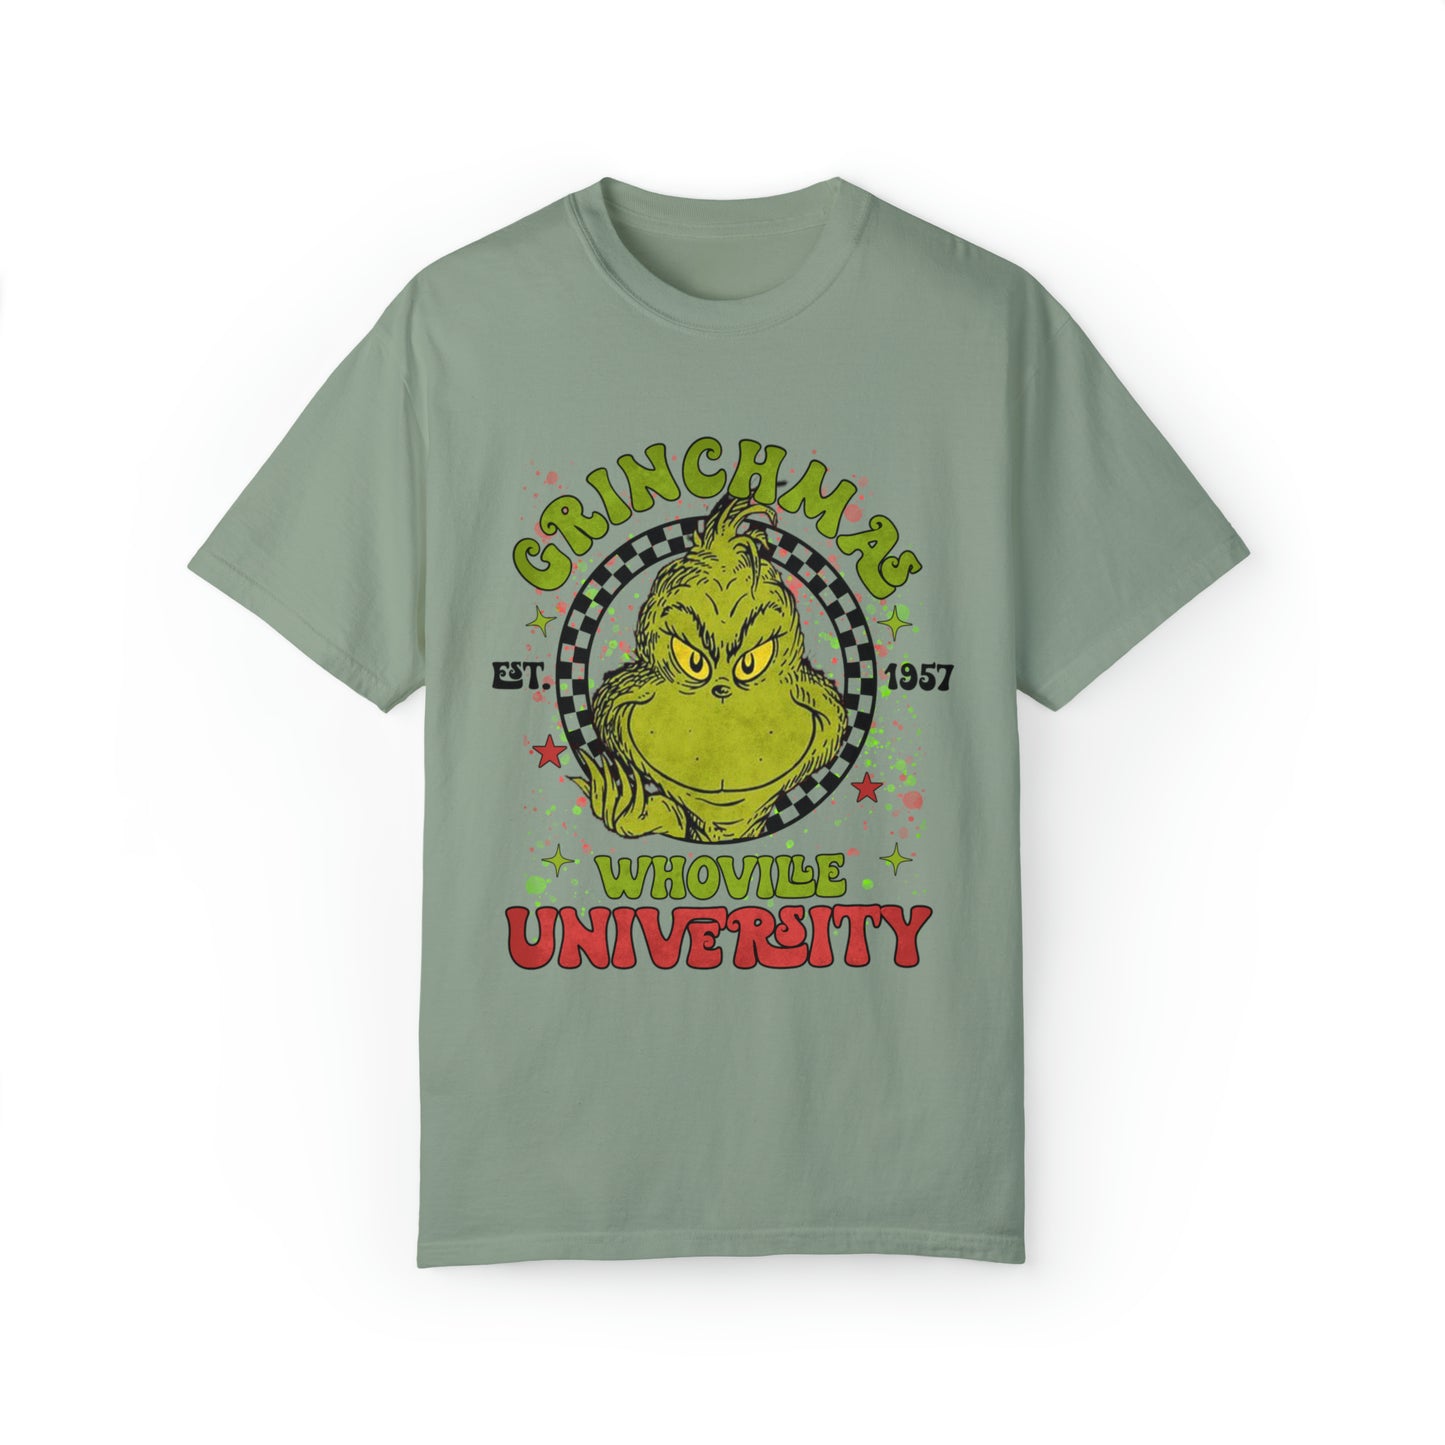 Grinchmas University Shirt